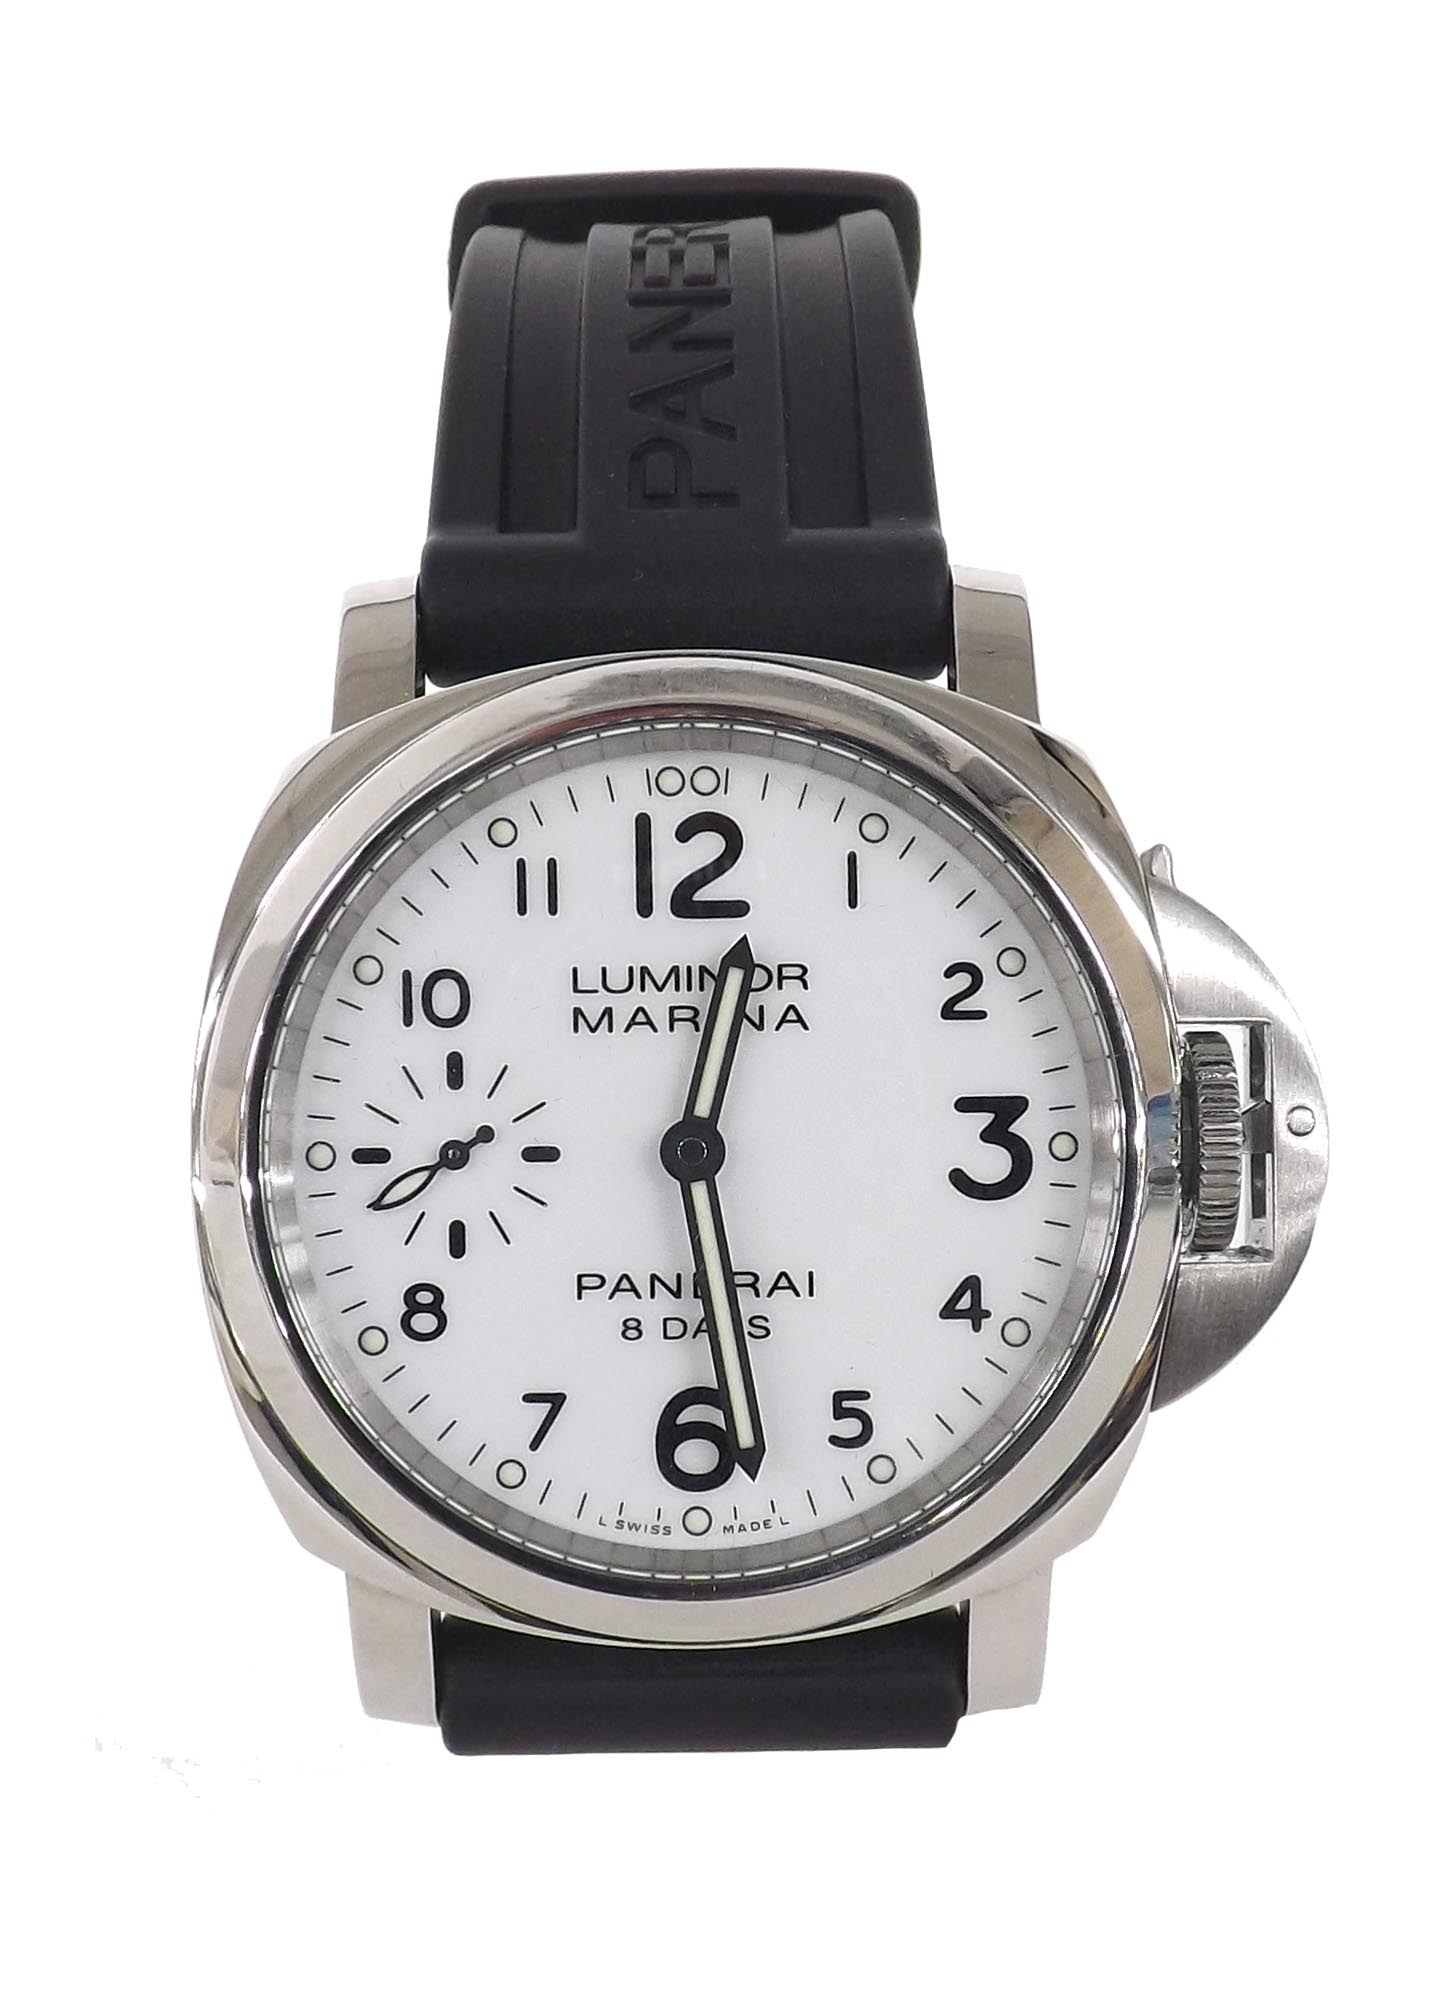 Panerai Luminor Marina 8 Days stainless steel gentleman's wristwatch, ref PAM00563, limited - Image 3 of 4